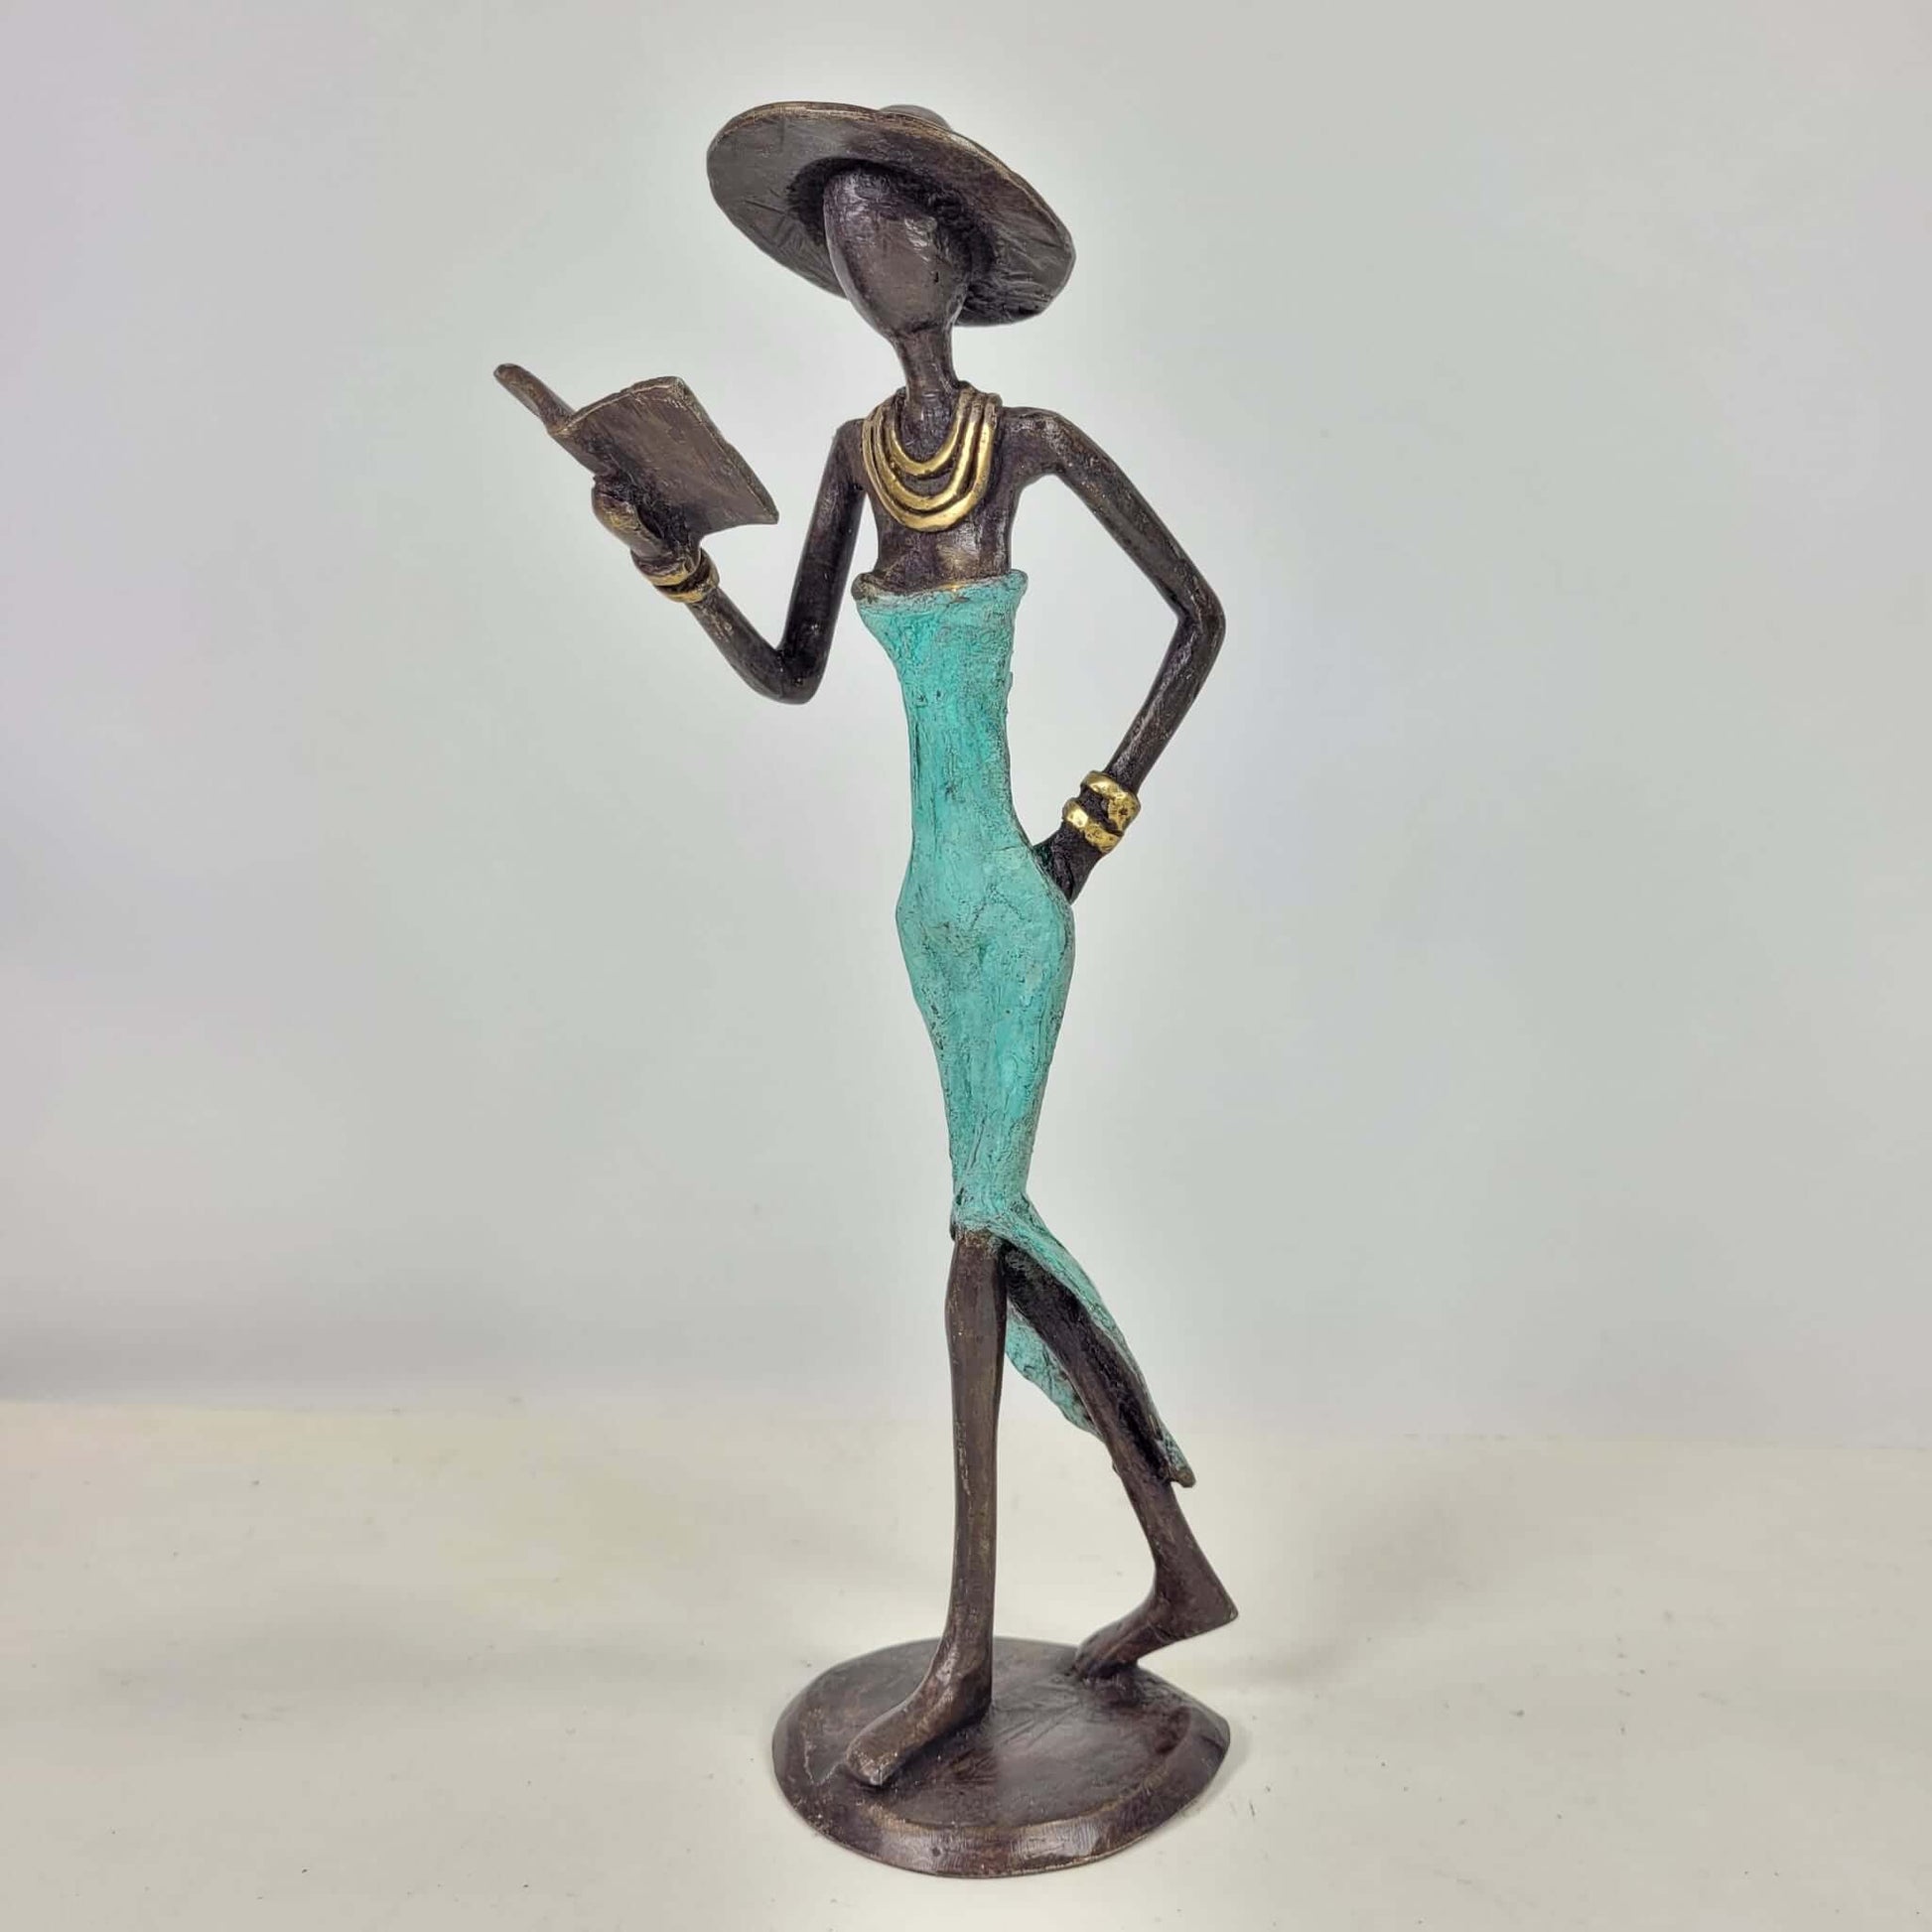 Bronze-Skulptur "Femme avec livre et chapeau" by Soré | verschiedene Größen und Farben